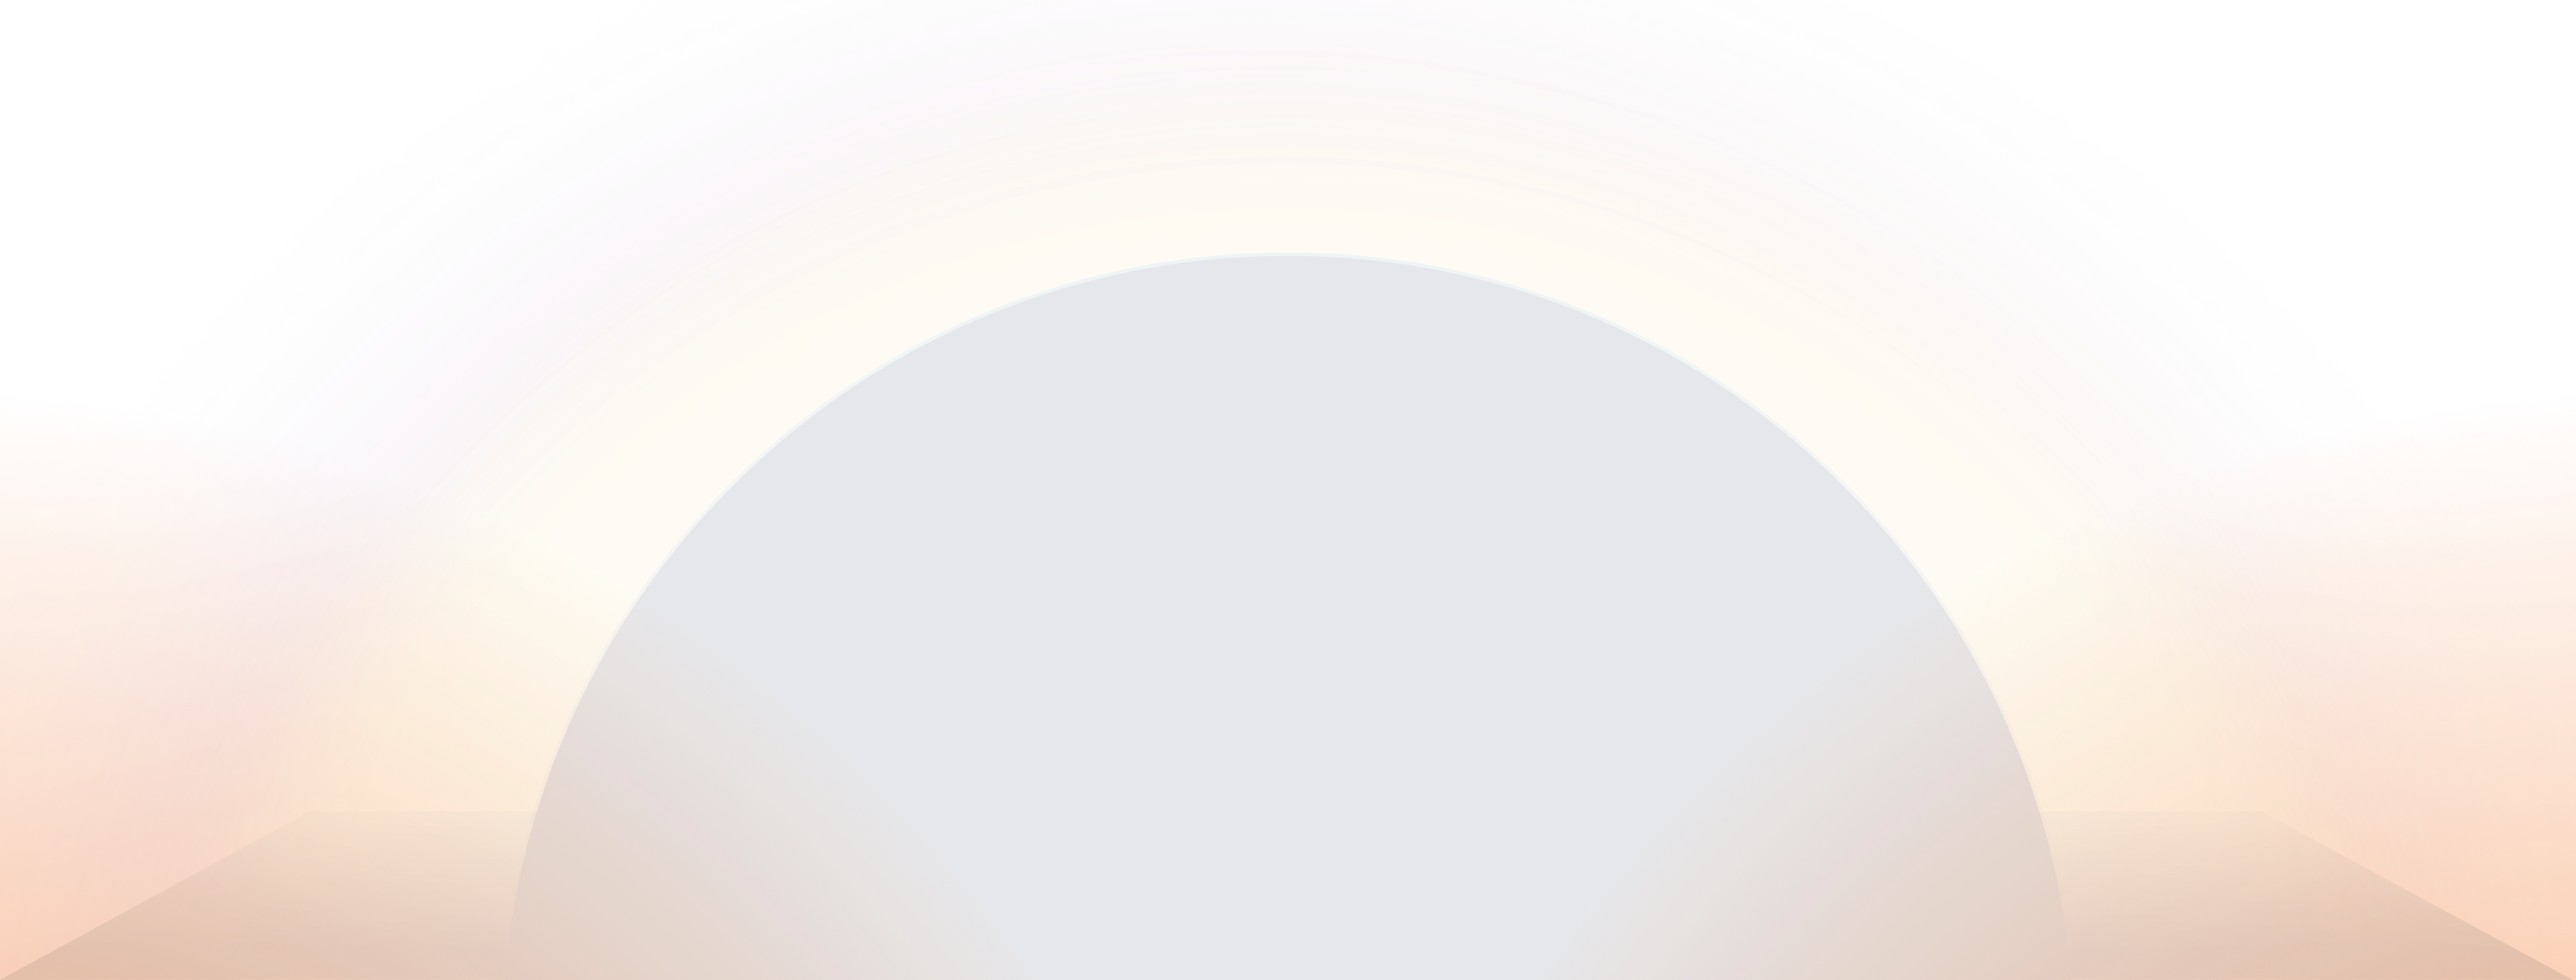 A glowing, planet-like orb peeking over a horizon.